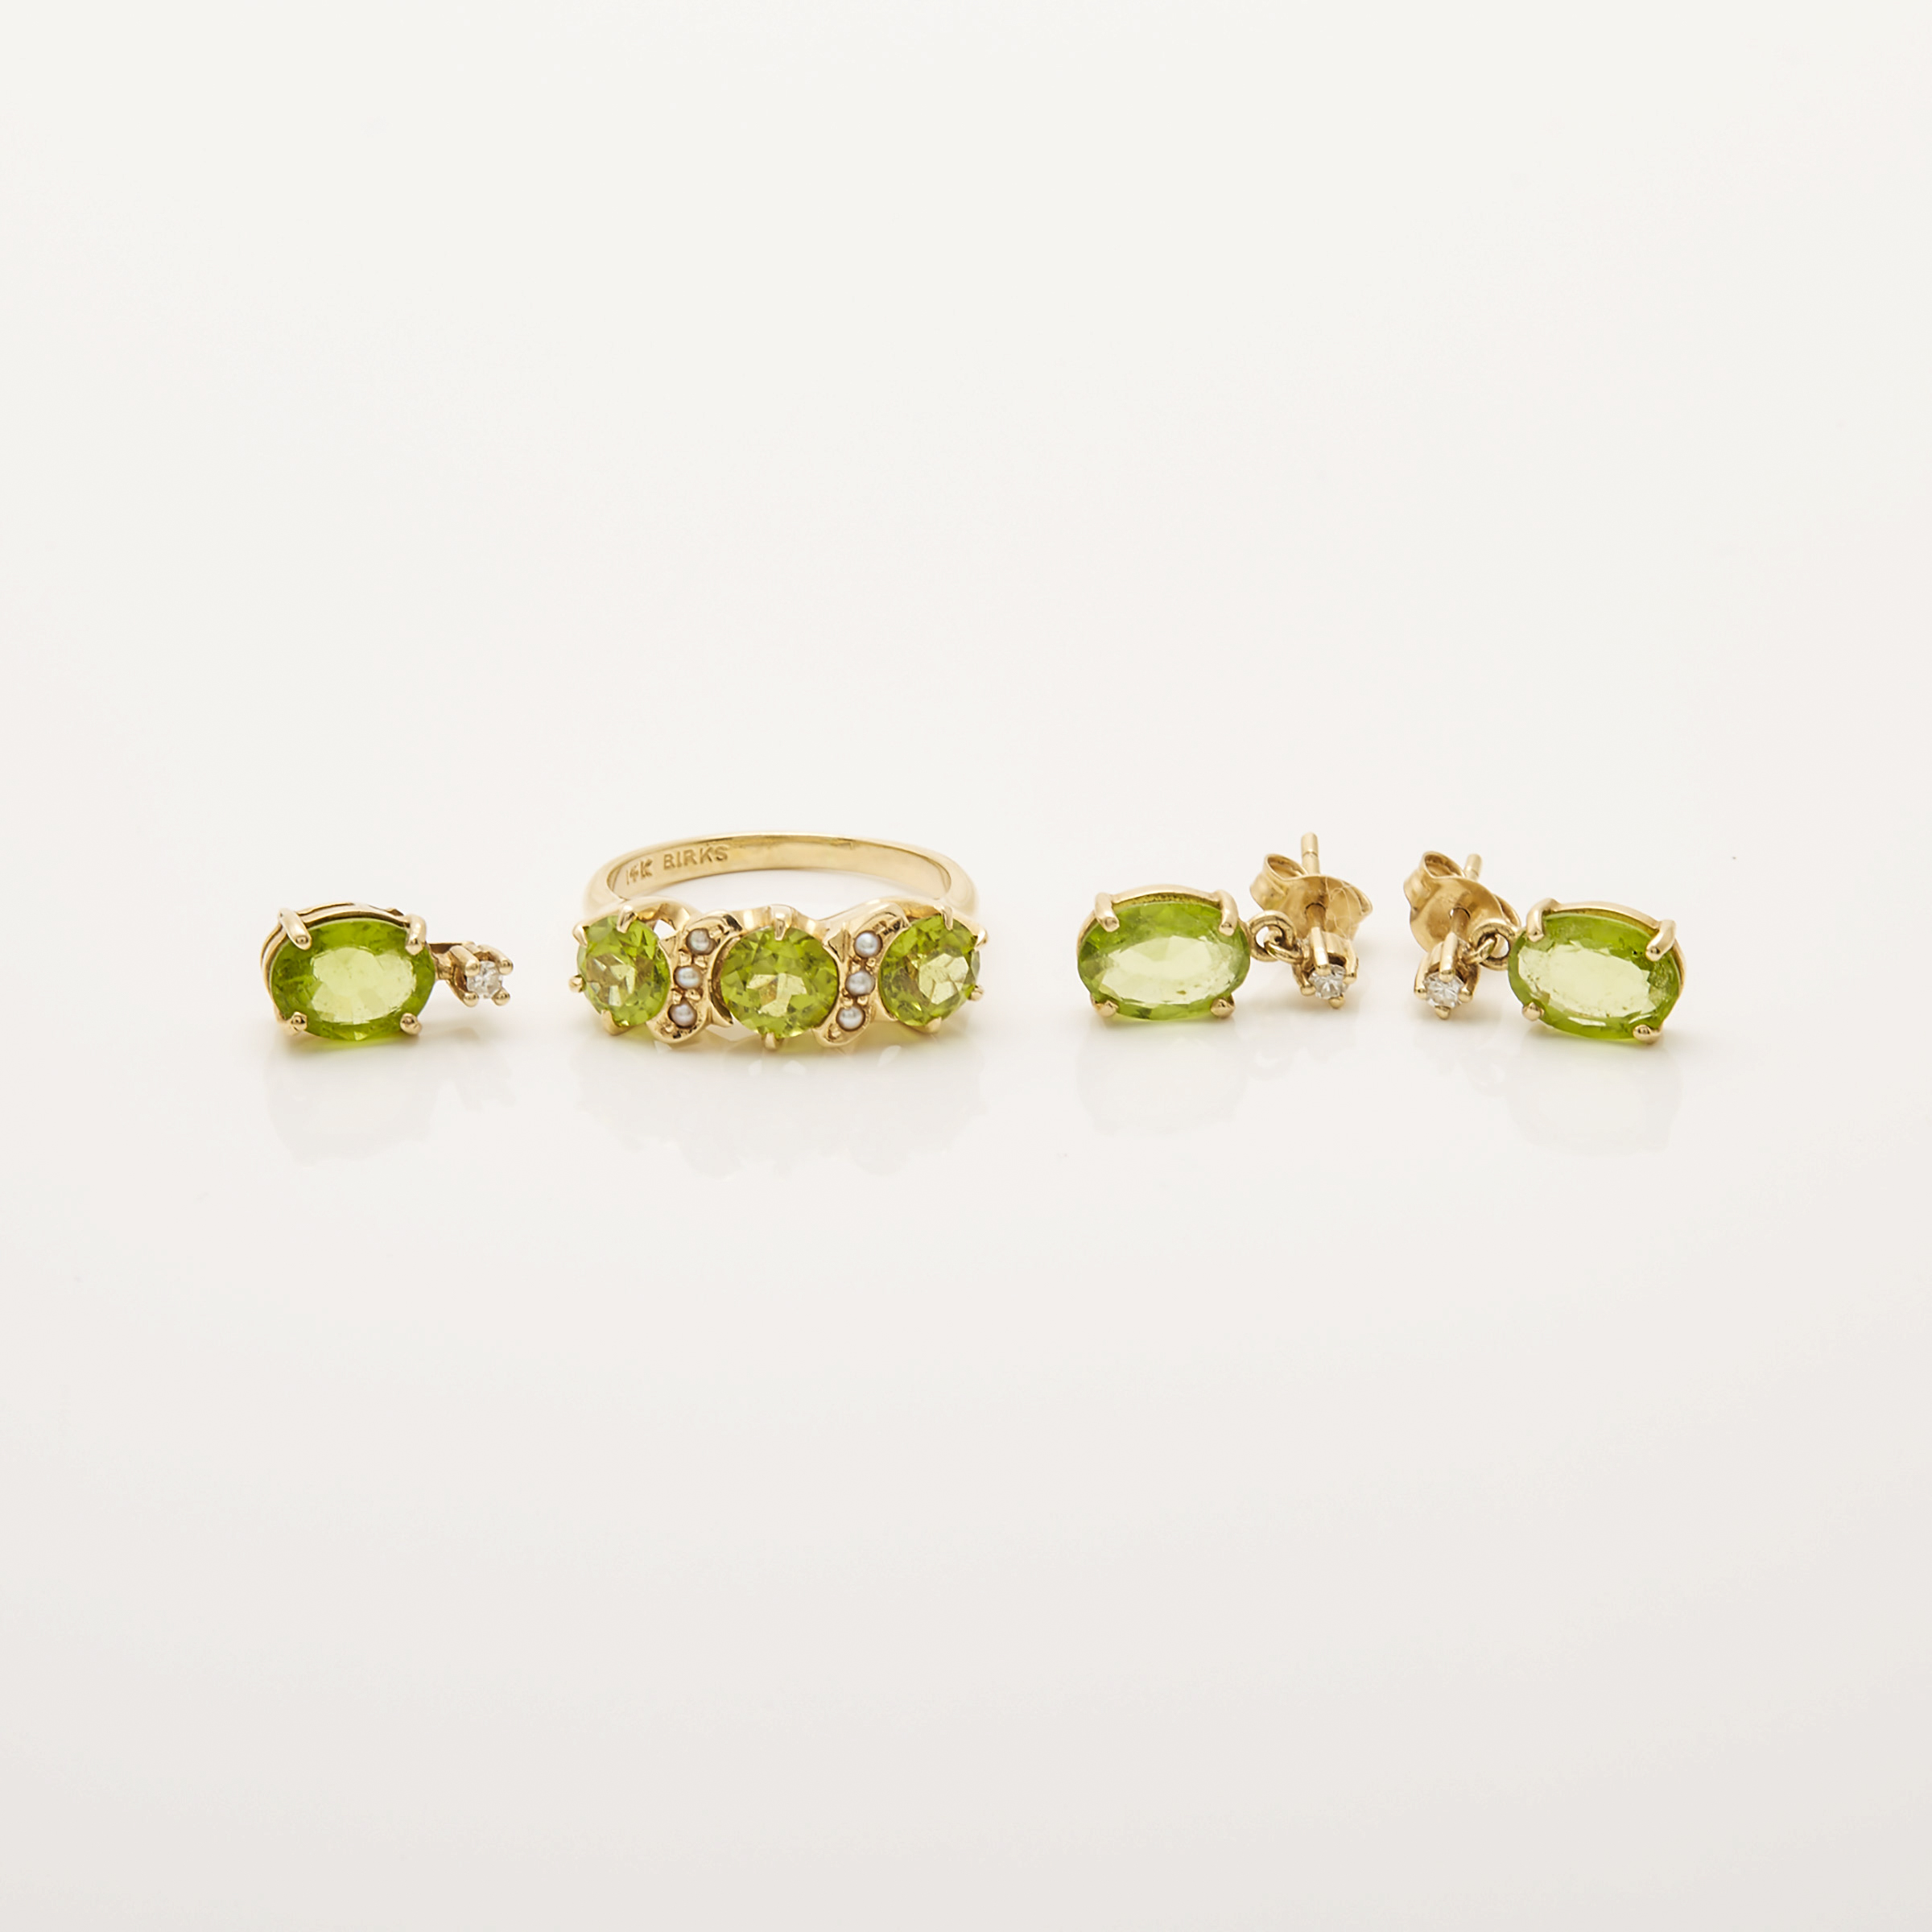 14k Yellow Gold Pair of Earrings, Pendant & Birks Ring